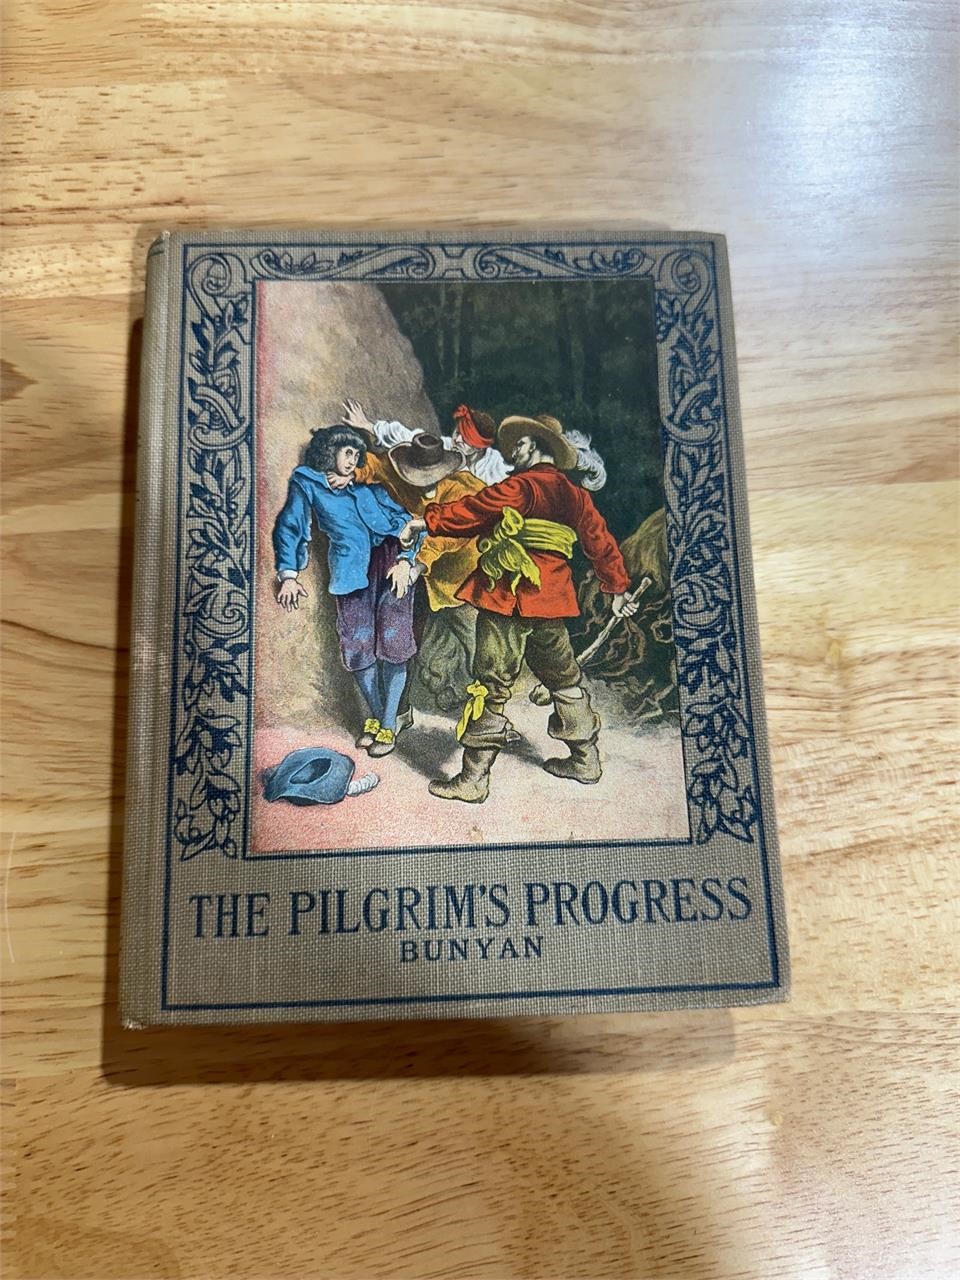 The pilgrims progress